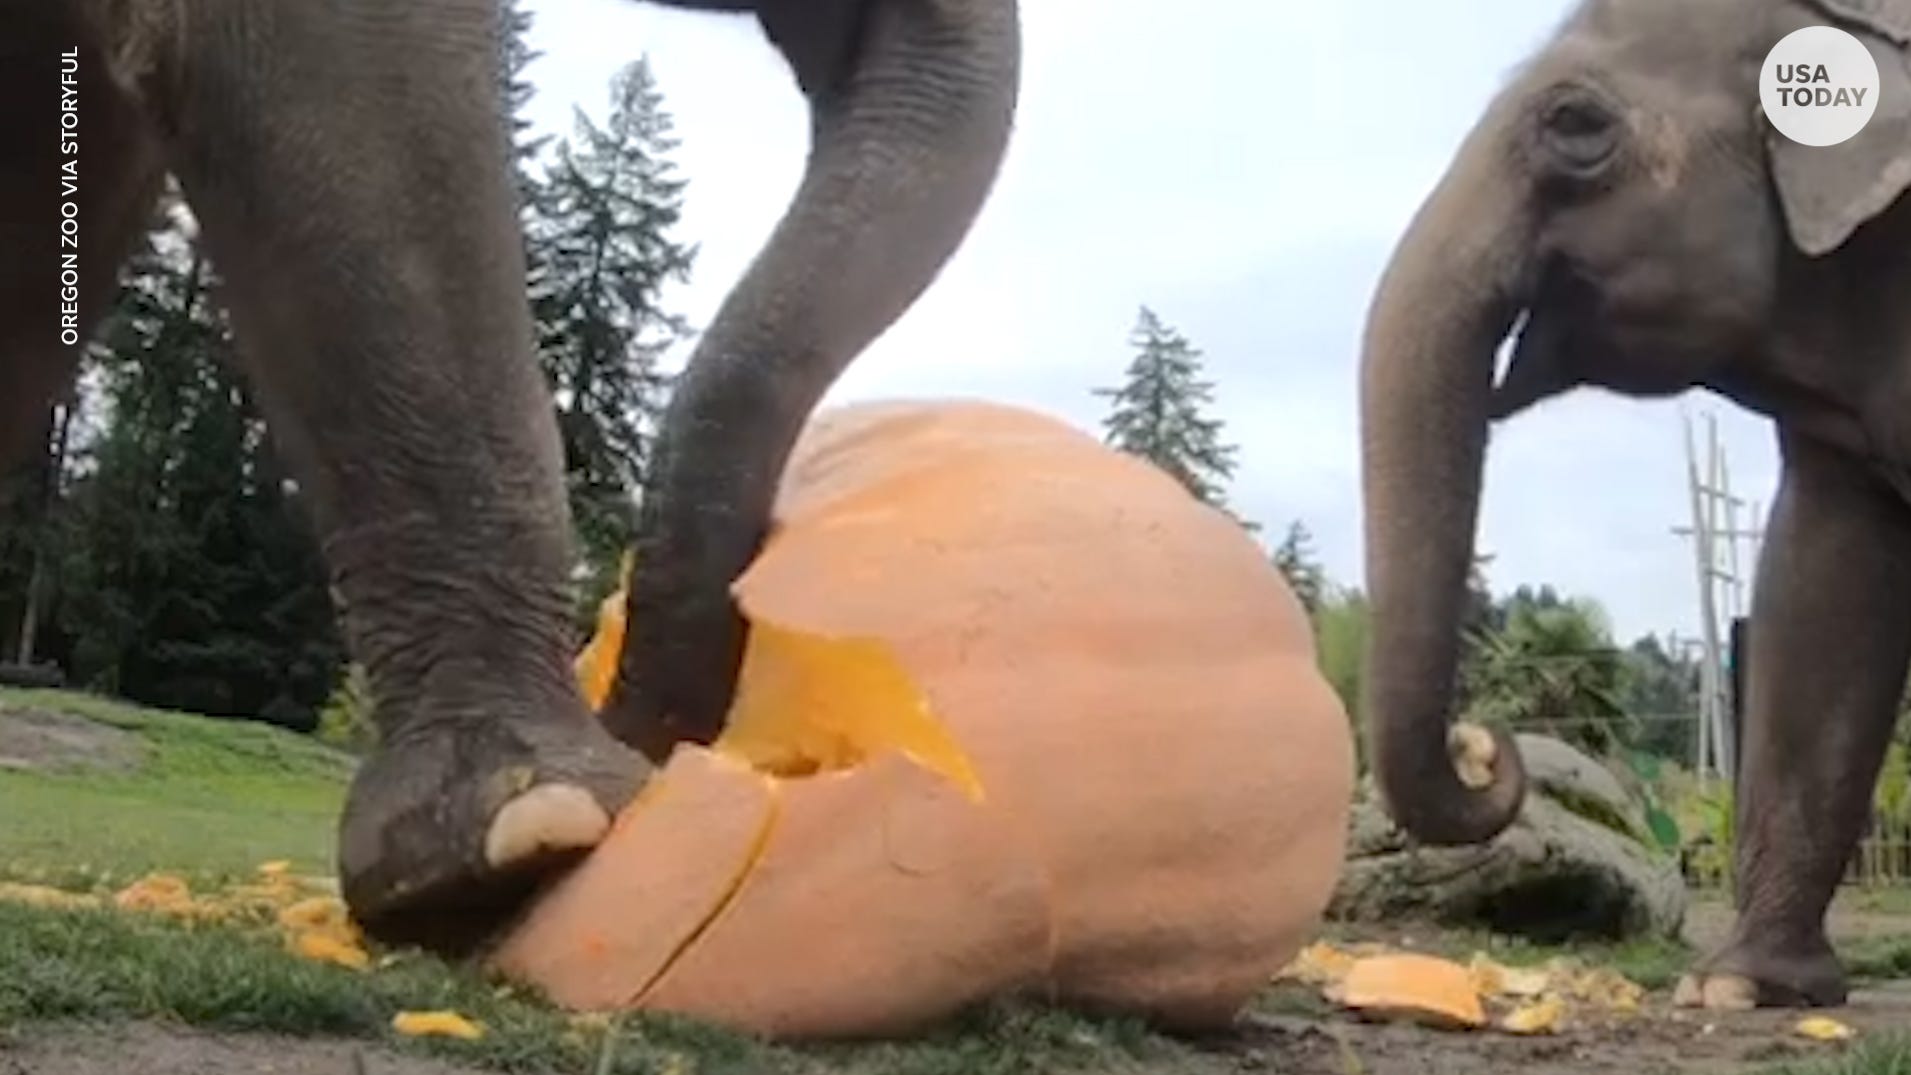 Elephants Smashing Pumpkins Is Strangely Satisfying